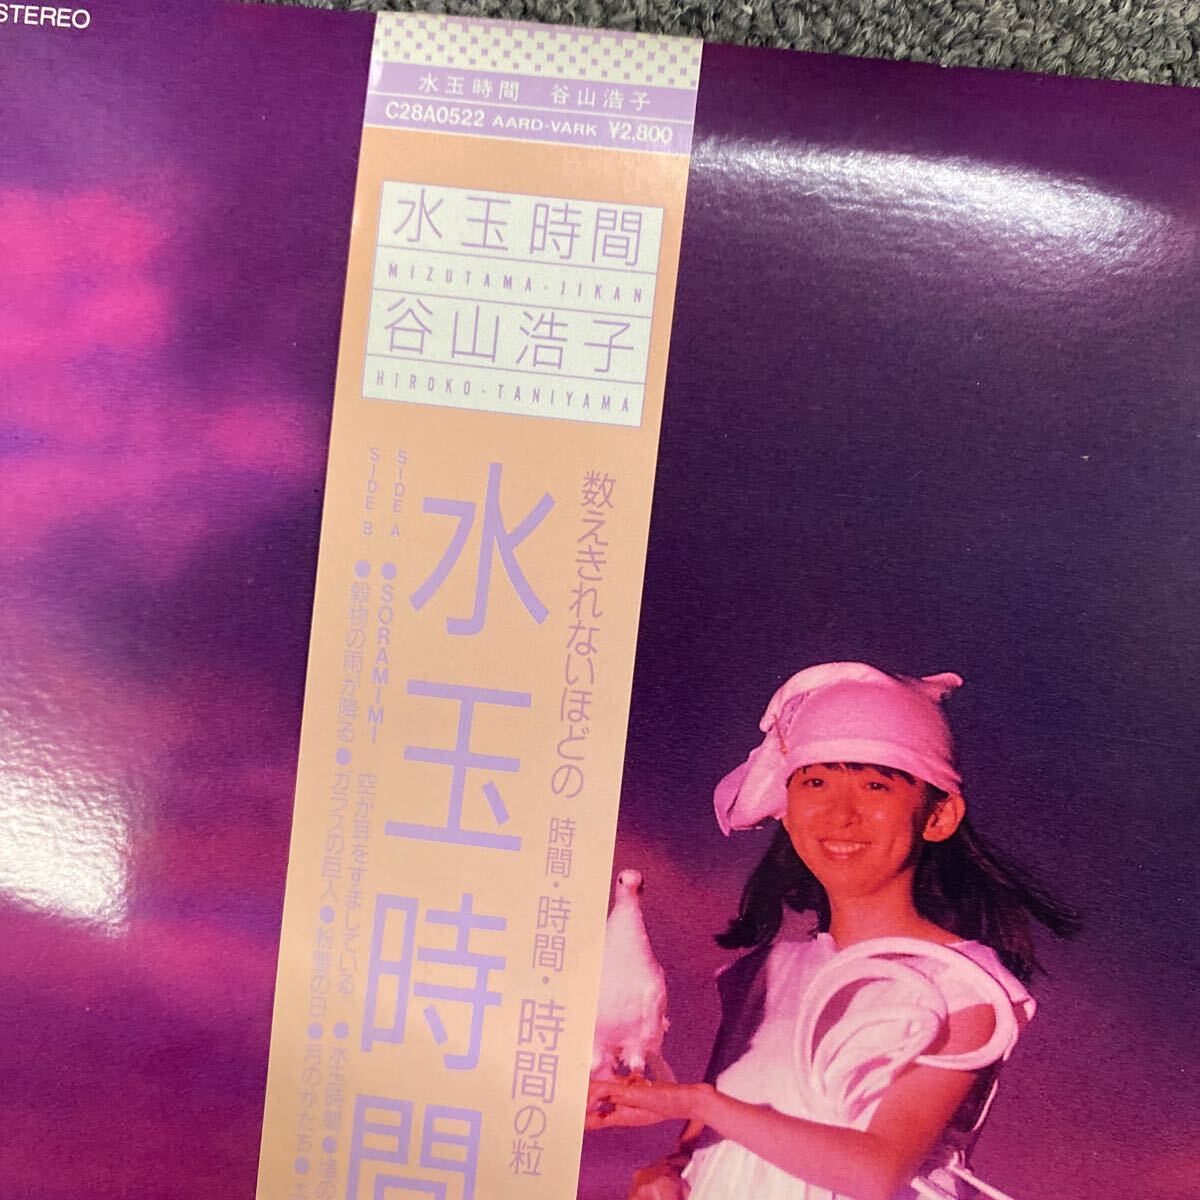 04590 LPレコード 見本盤/非売品 水玉時間 / 谷山浩子 HIROKO TANIYAMA 1986年 帯付 動作未確認の画像3